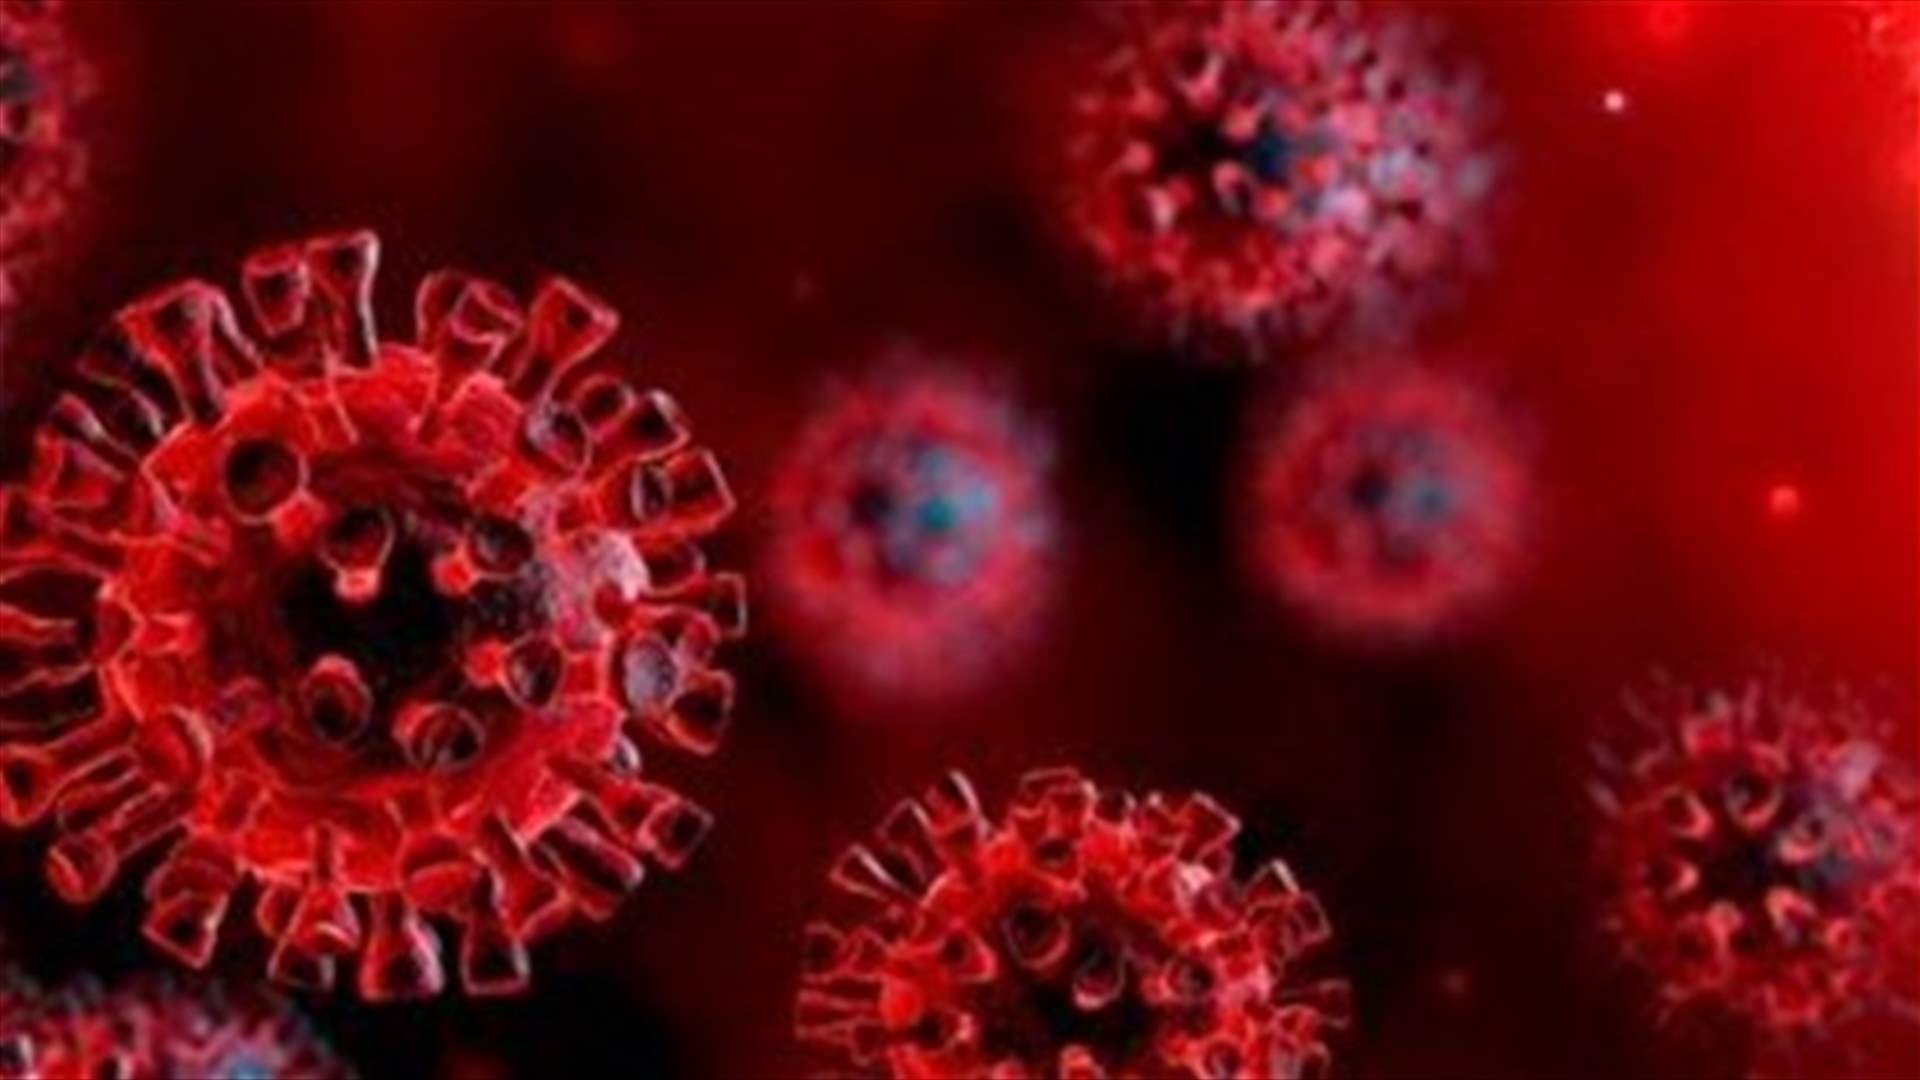 Health Ministry confirms 4 new Coronavirus cases